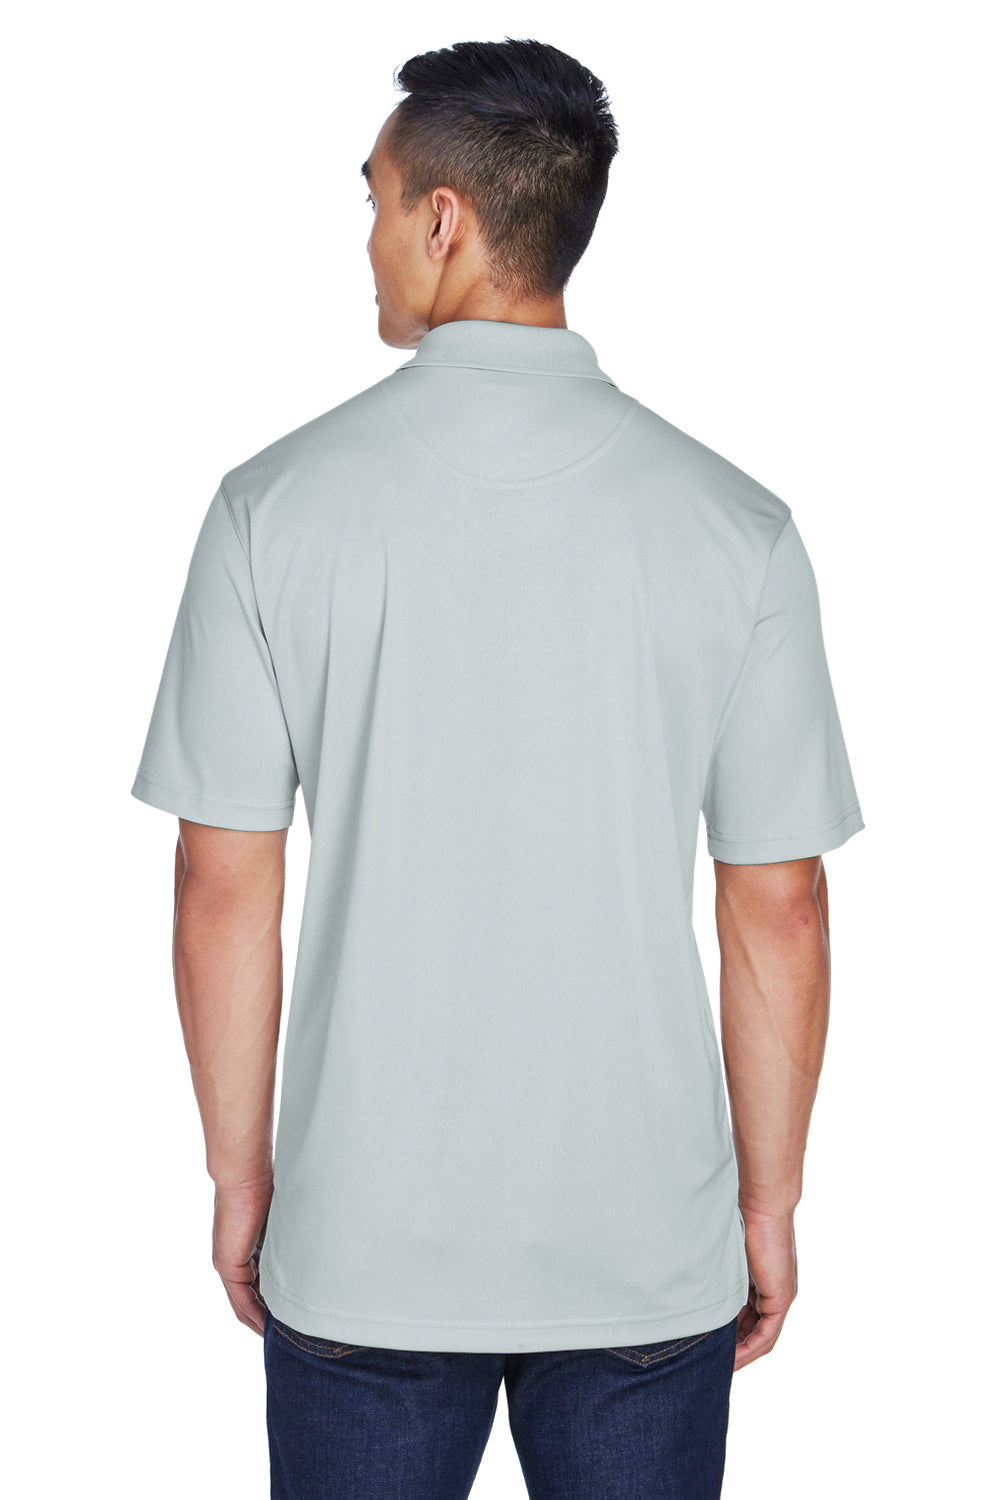 UltraClub 8405 Mens Cool & Dry Moisture Wicking Short Sleeve Polo Shirt Grey Back